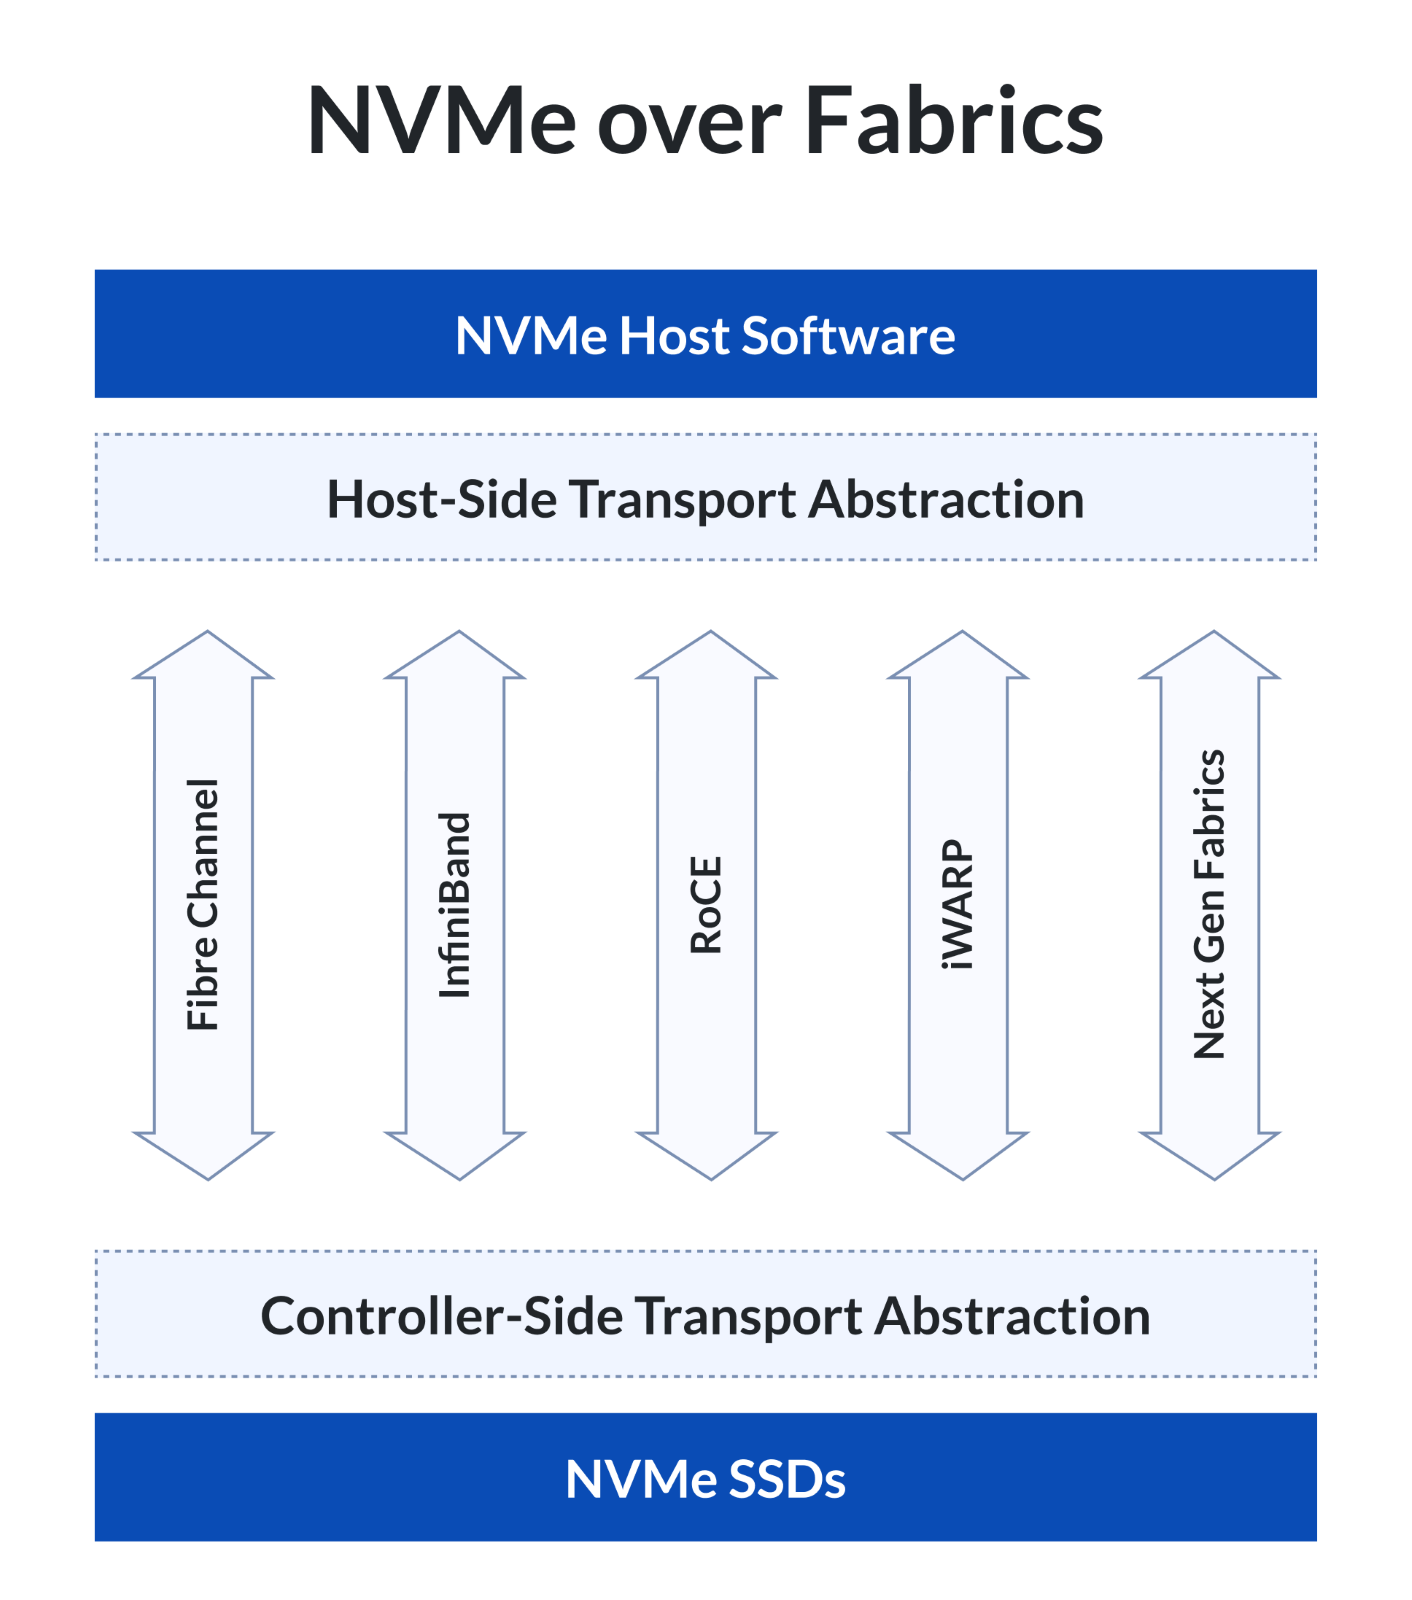 NVMe over Fabrics